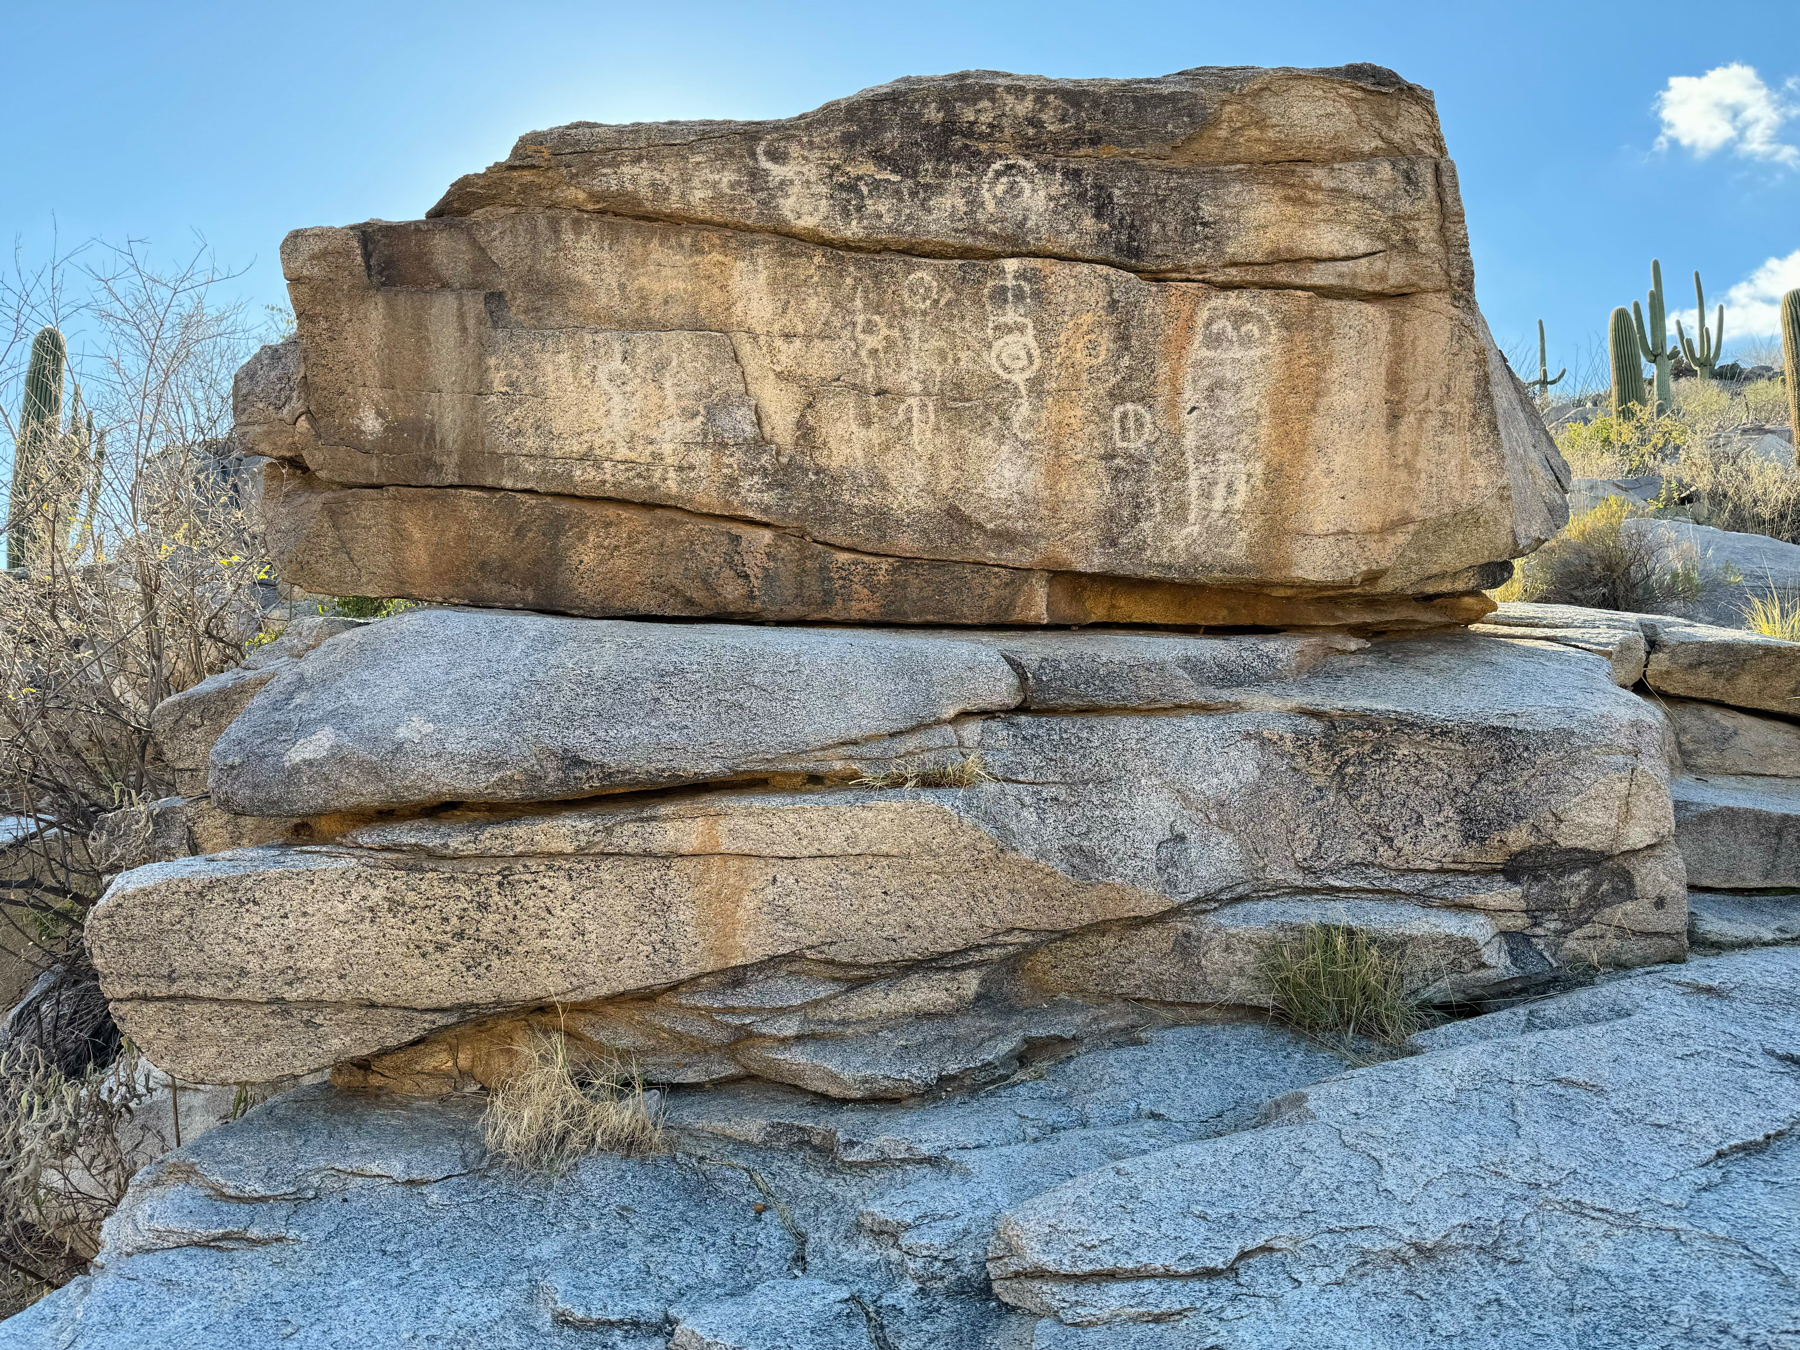 Large rock formation with petroglyphs, surrounded by desert vegetation including saguaro cacti, under a bright blue sky.